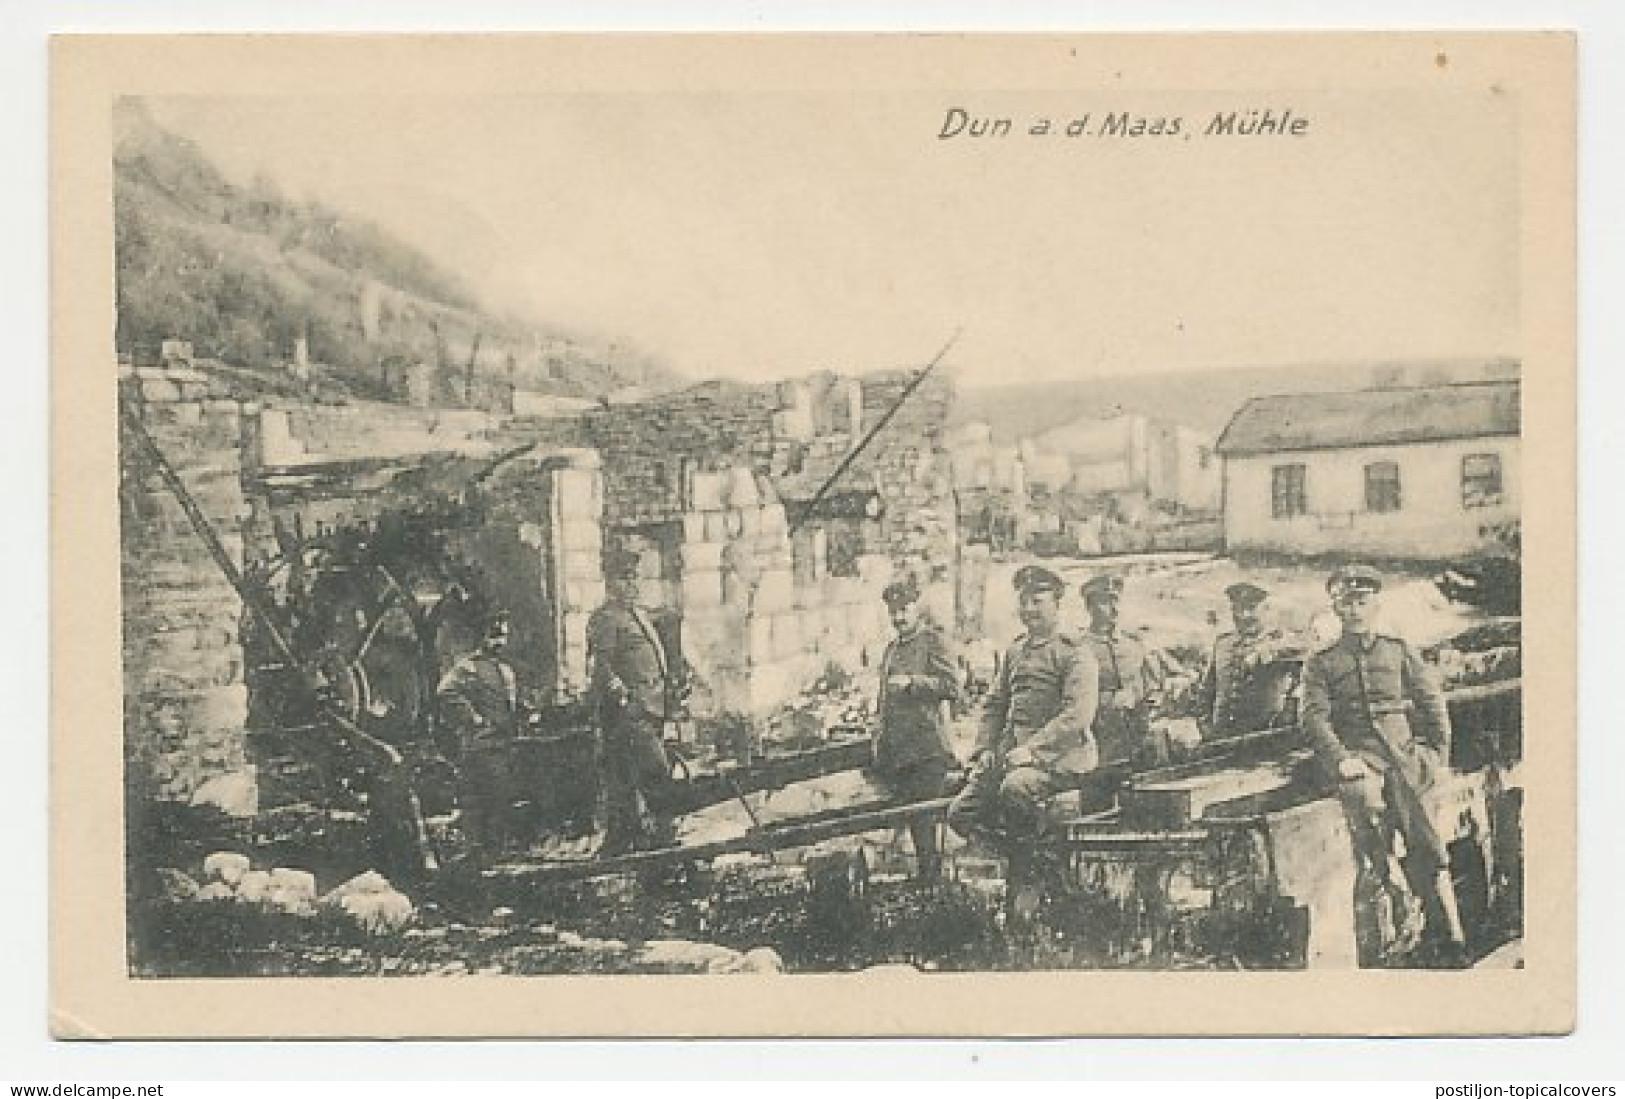 Fieldpost Postcard Germany / France 1916 Soldiers - Dun Sur Meuse - WWI - 1. Weltkrieg